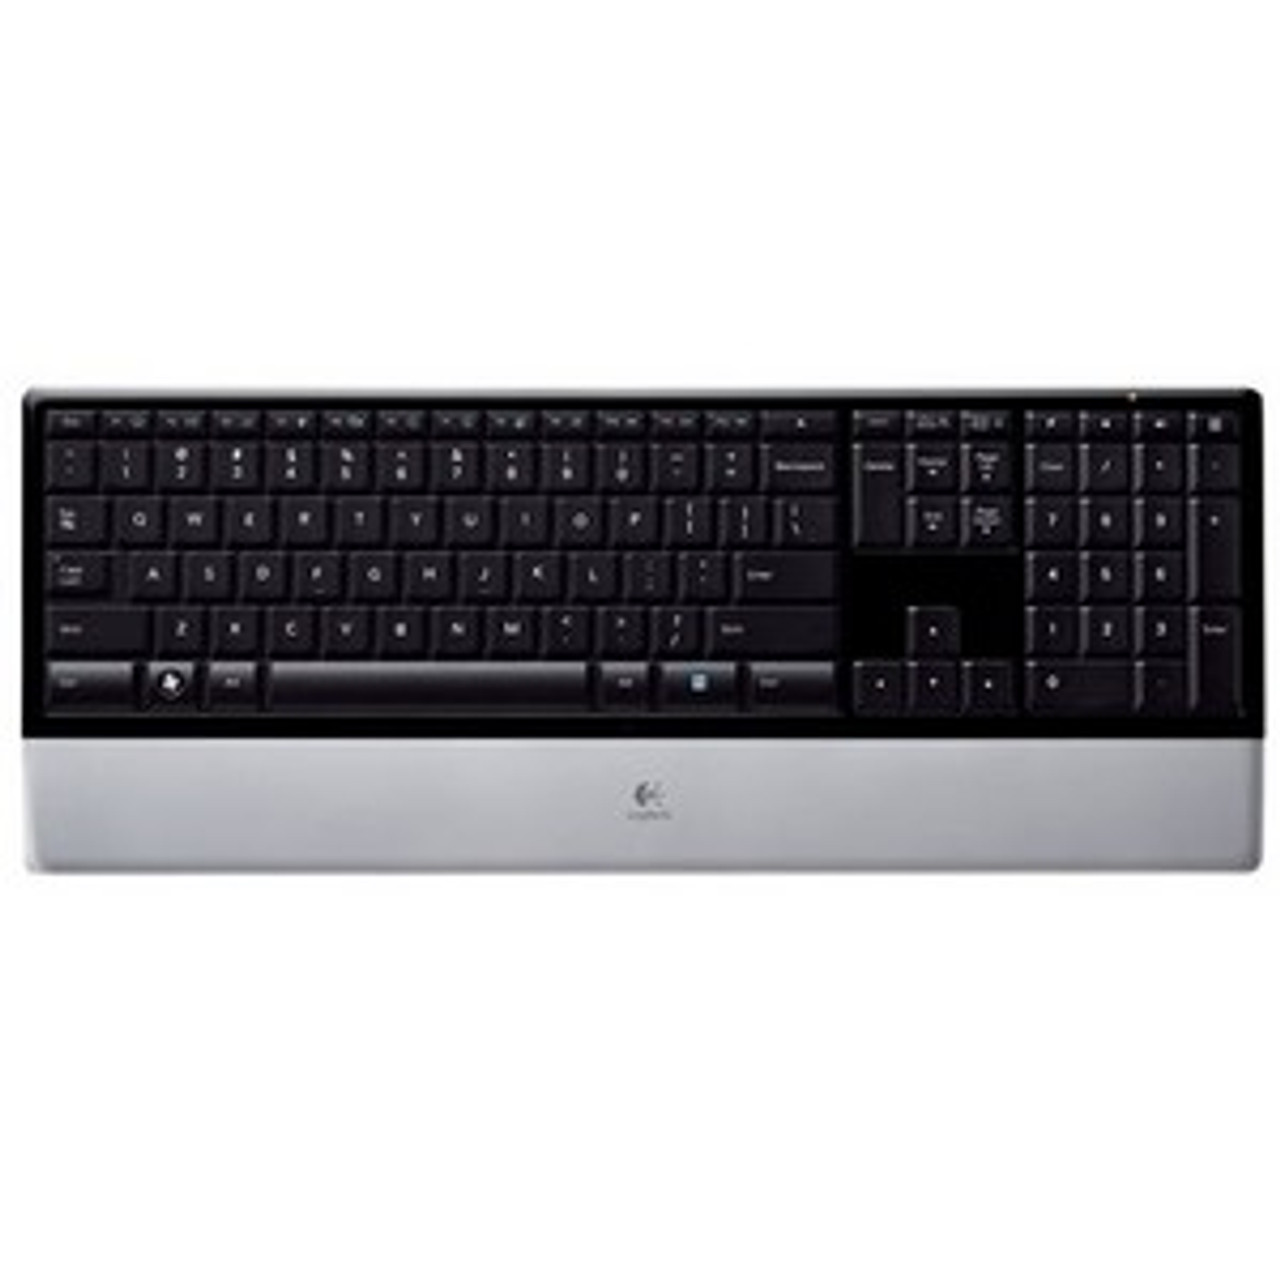 920-000927 - Logitech diNovo Keyboard for Notebooks USB Piano Black